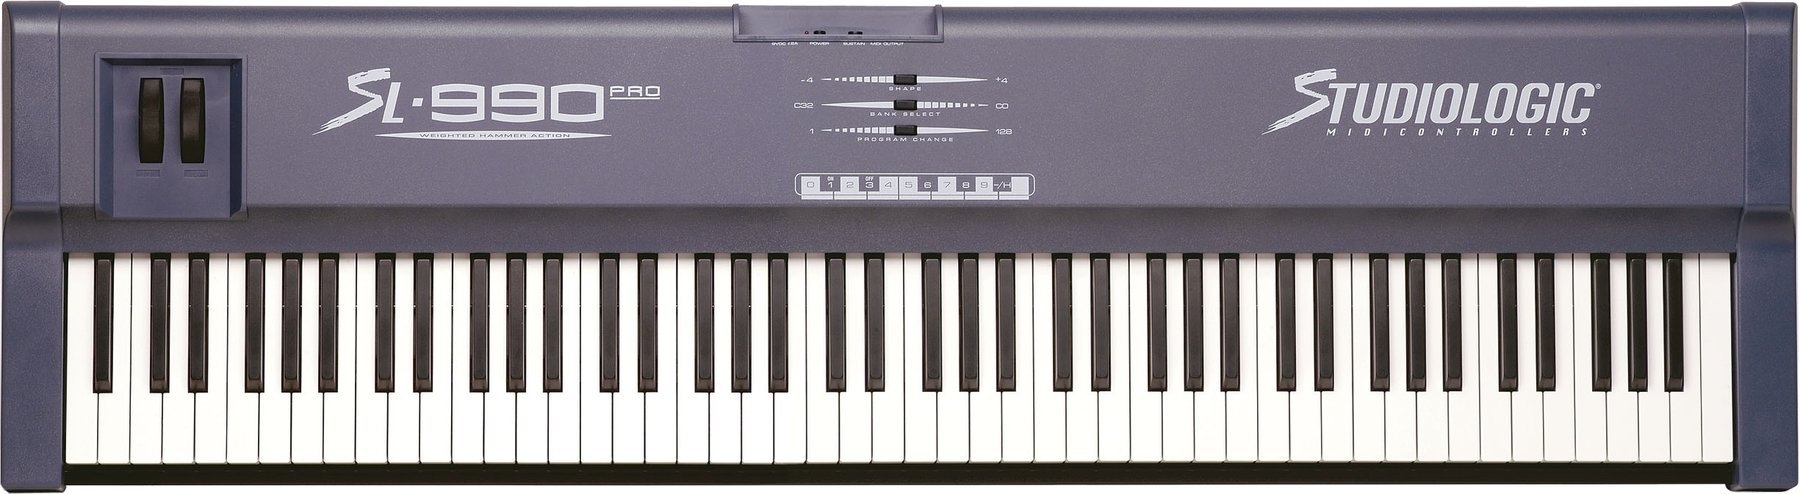 Master Keyboard Studiologic SL990 PRO